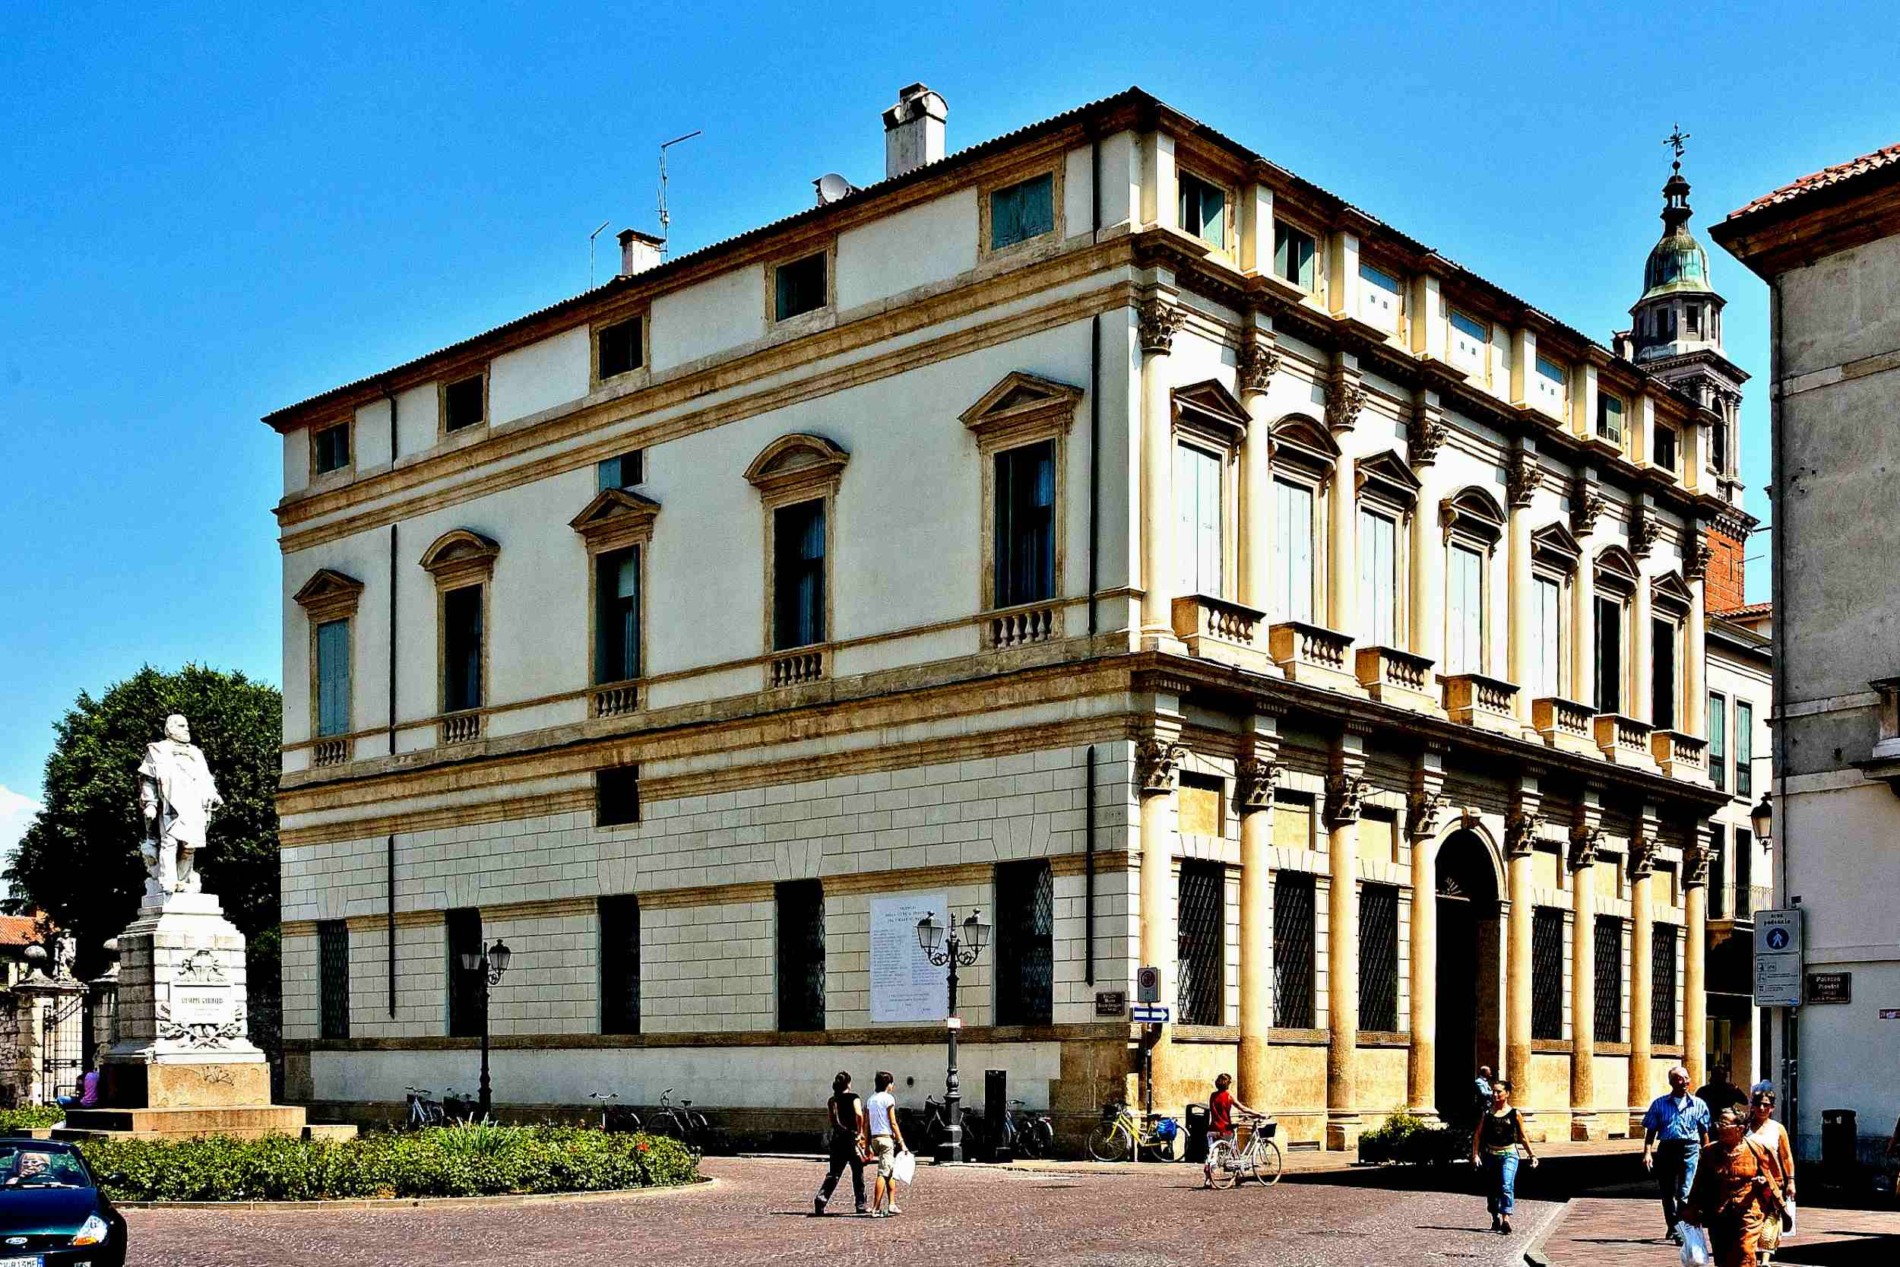 Palazzo Thiene Bonin Longare: Vicenza and Palladian Villas of the Veneto